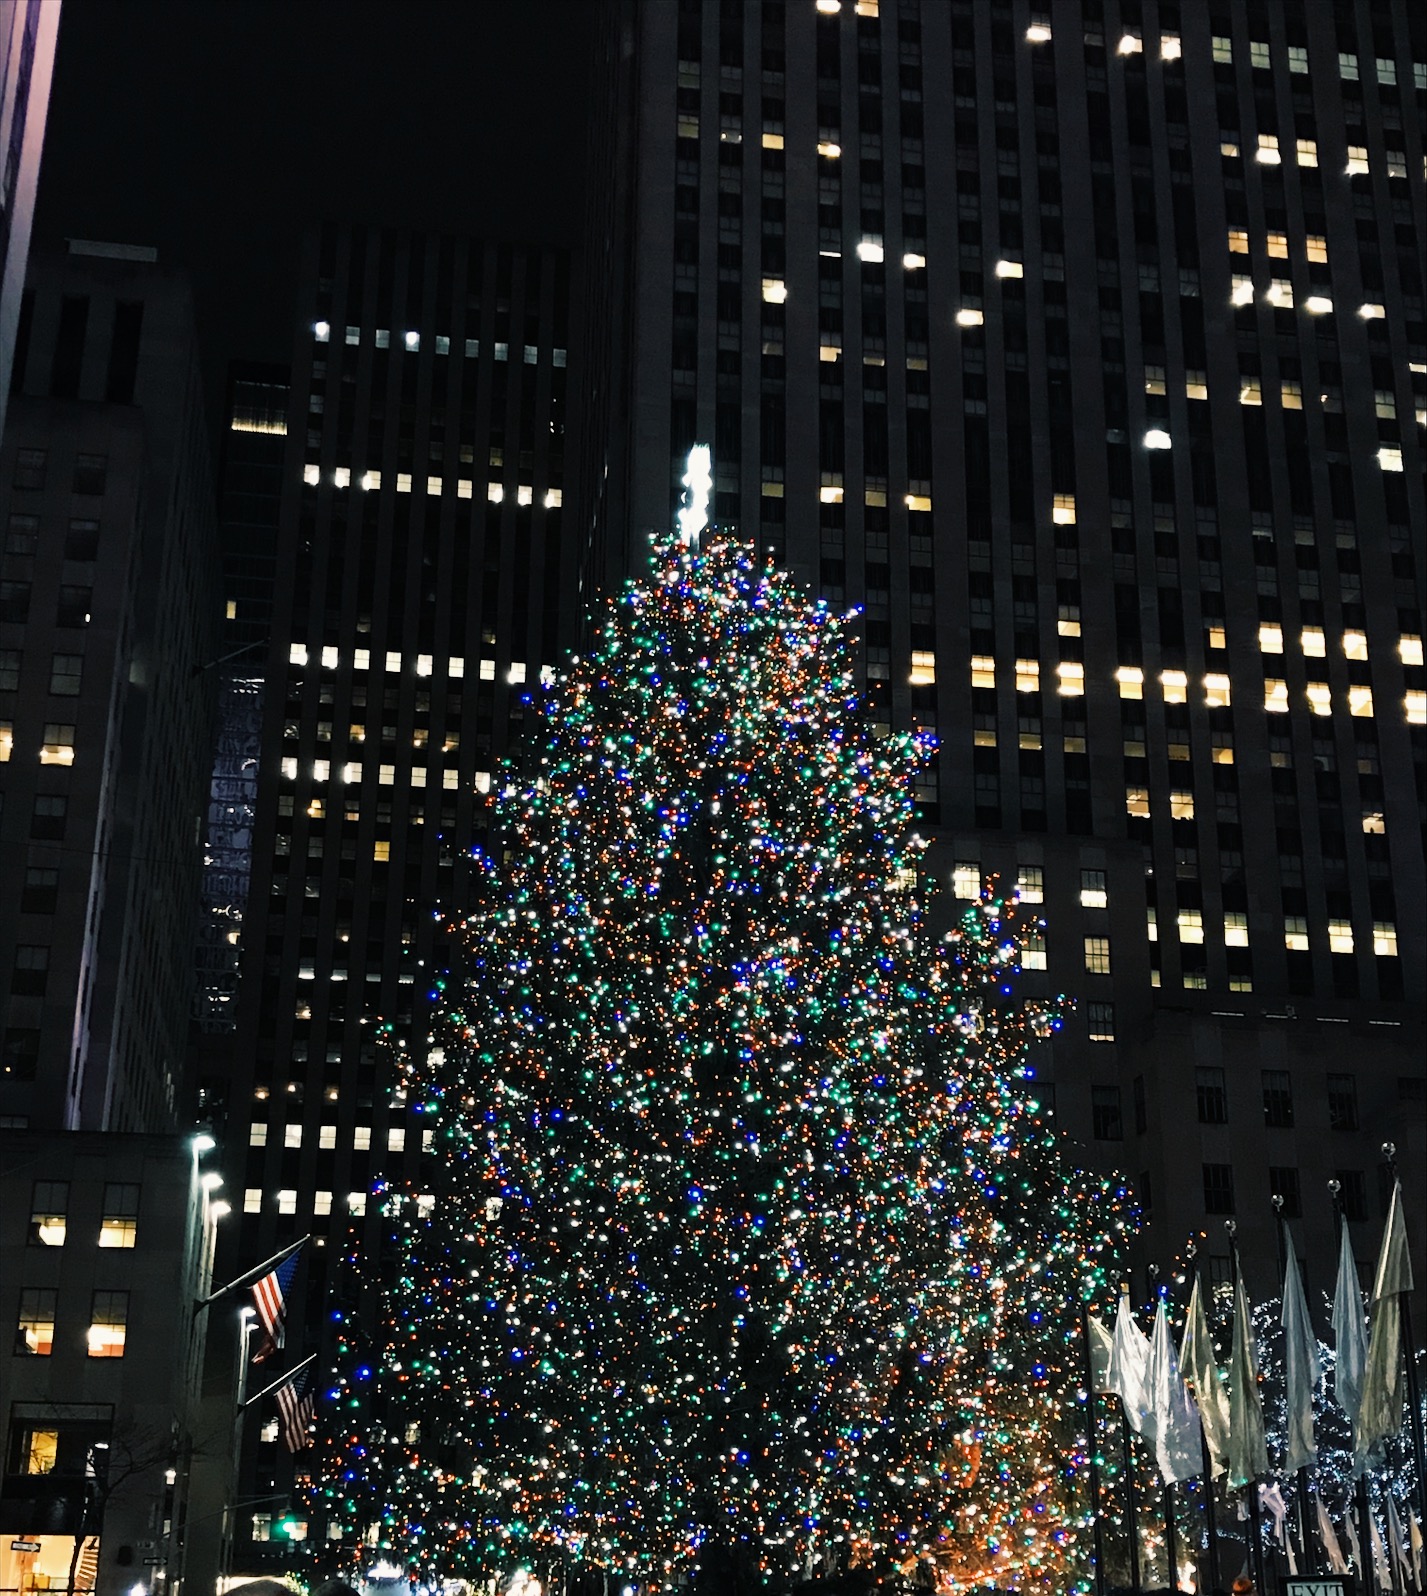 Rockin' around the Christmas tree: Rockefeller tree lit up